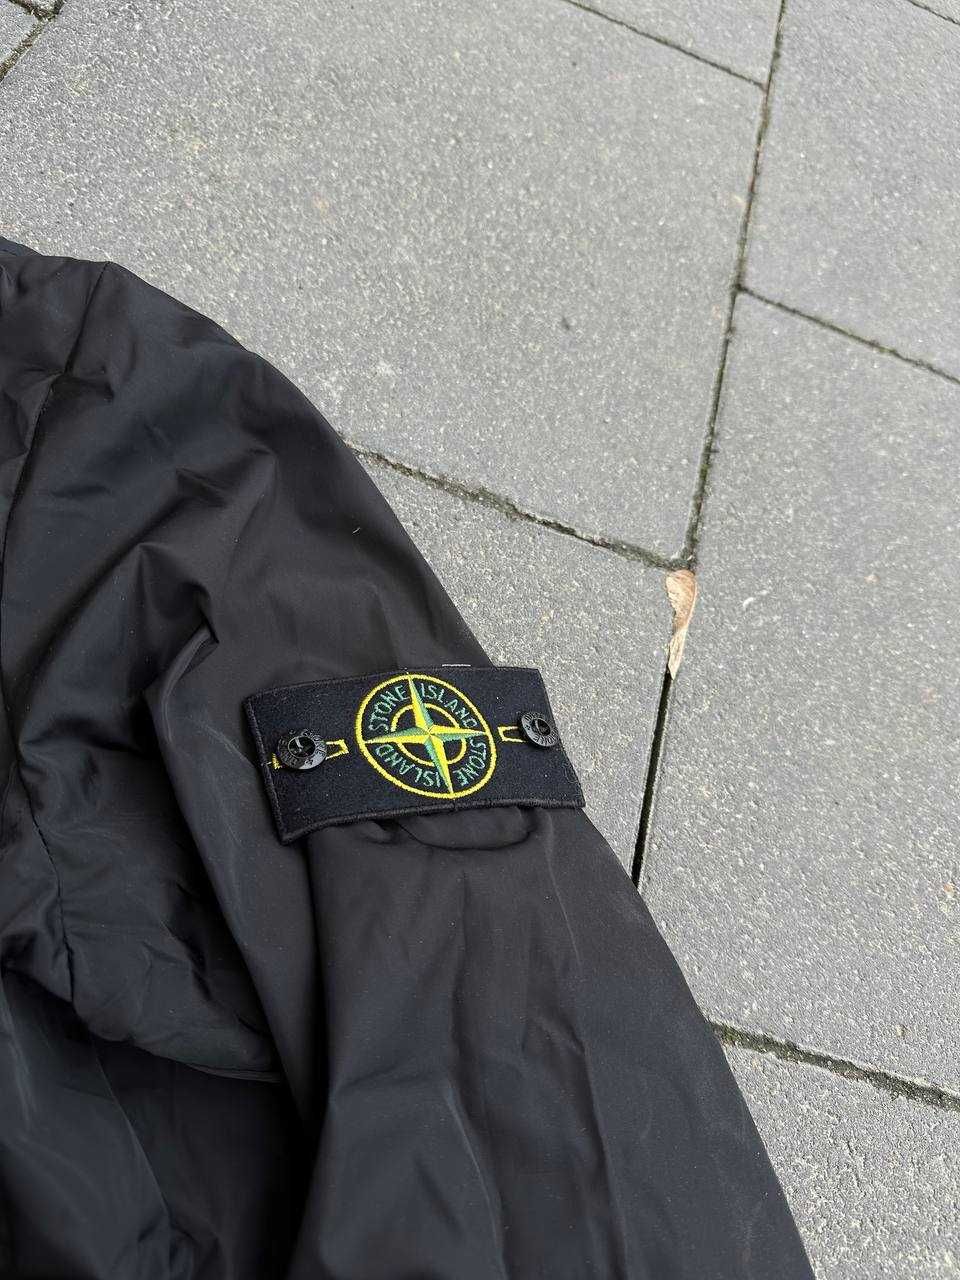 Вітровка Стон Айленд / Stone Island куртка черная мужская / GoreTex